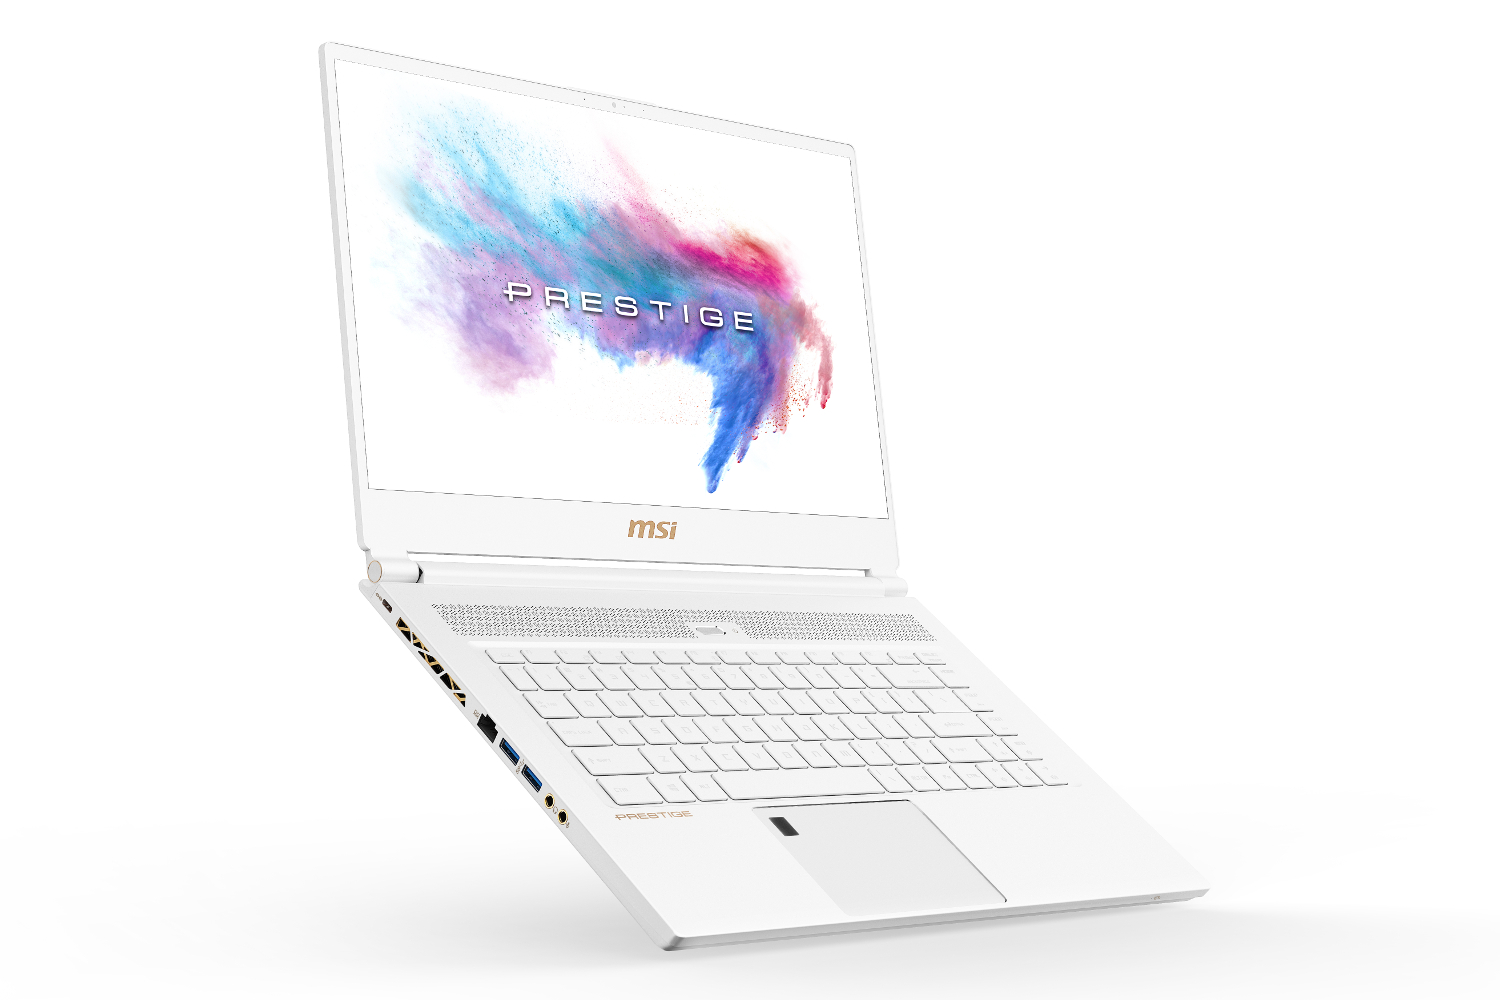 msi new laptop for content creators geforce graphics p65